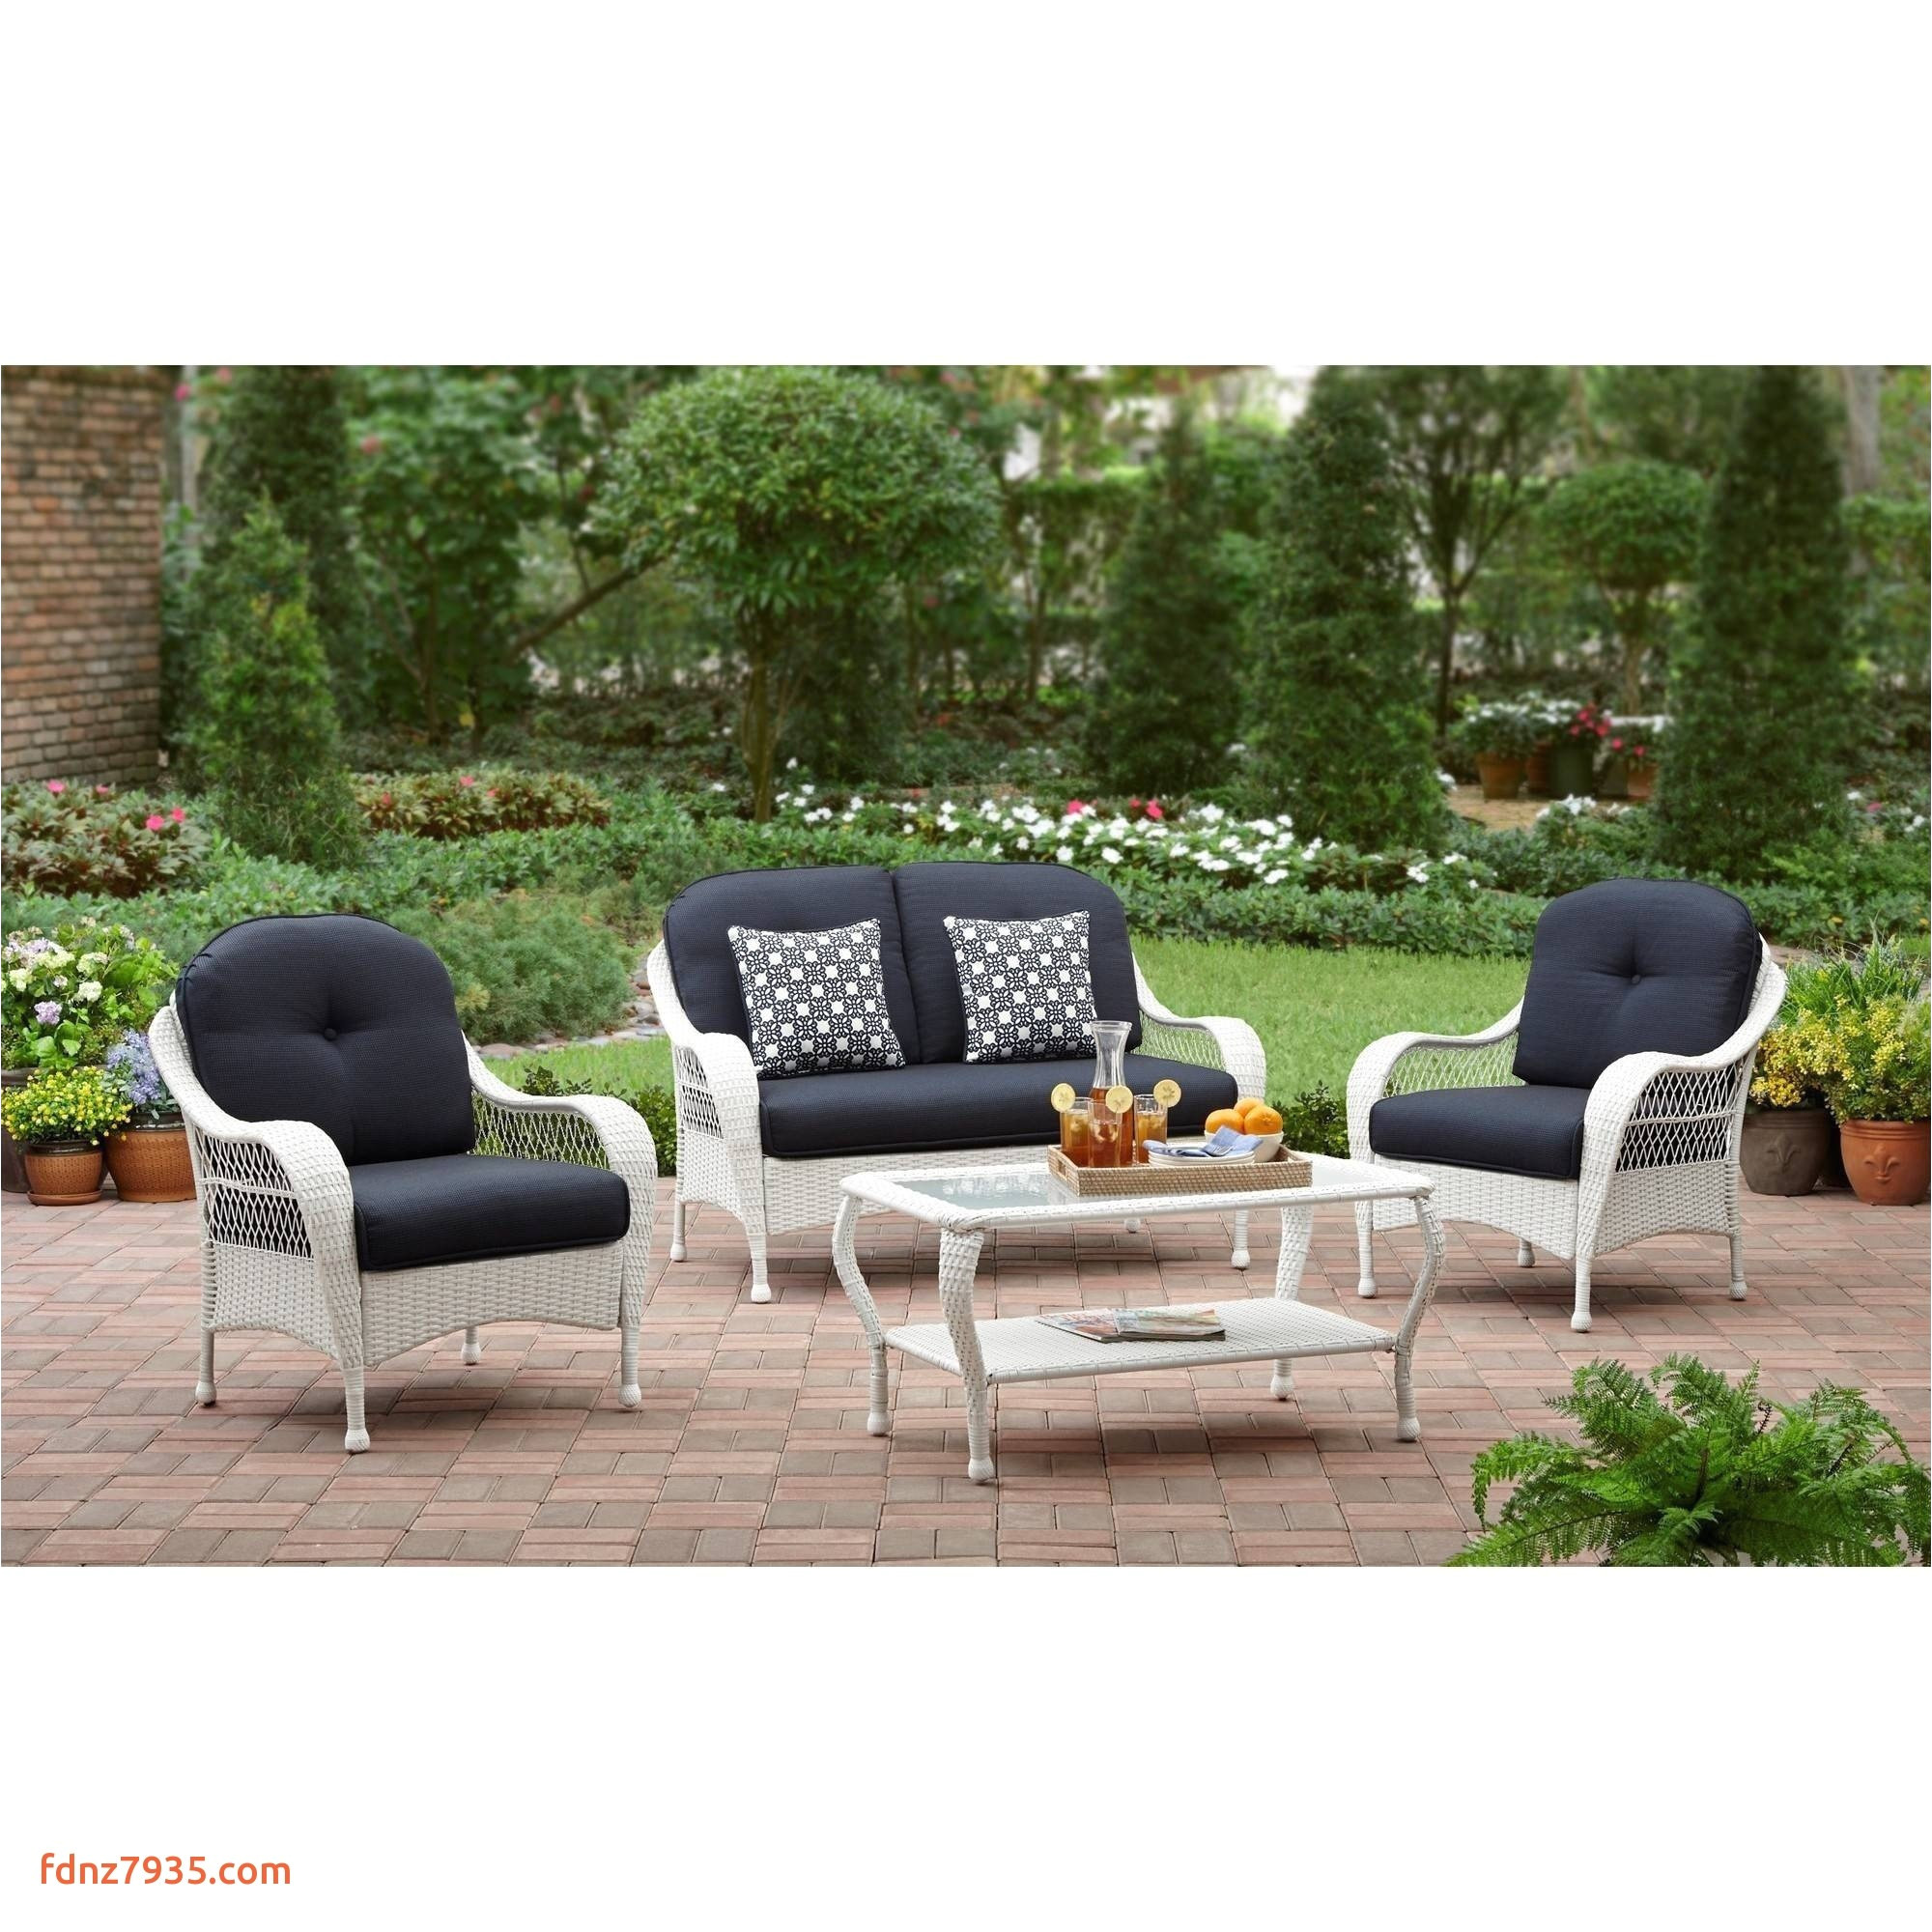 bedroom charming outdoor conversation furniture 24 wicker patio set best sofa 0d 1 conversation outdoor furniture